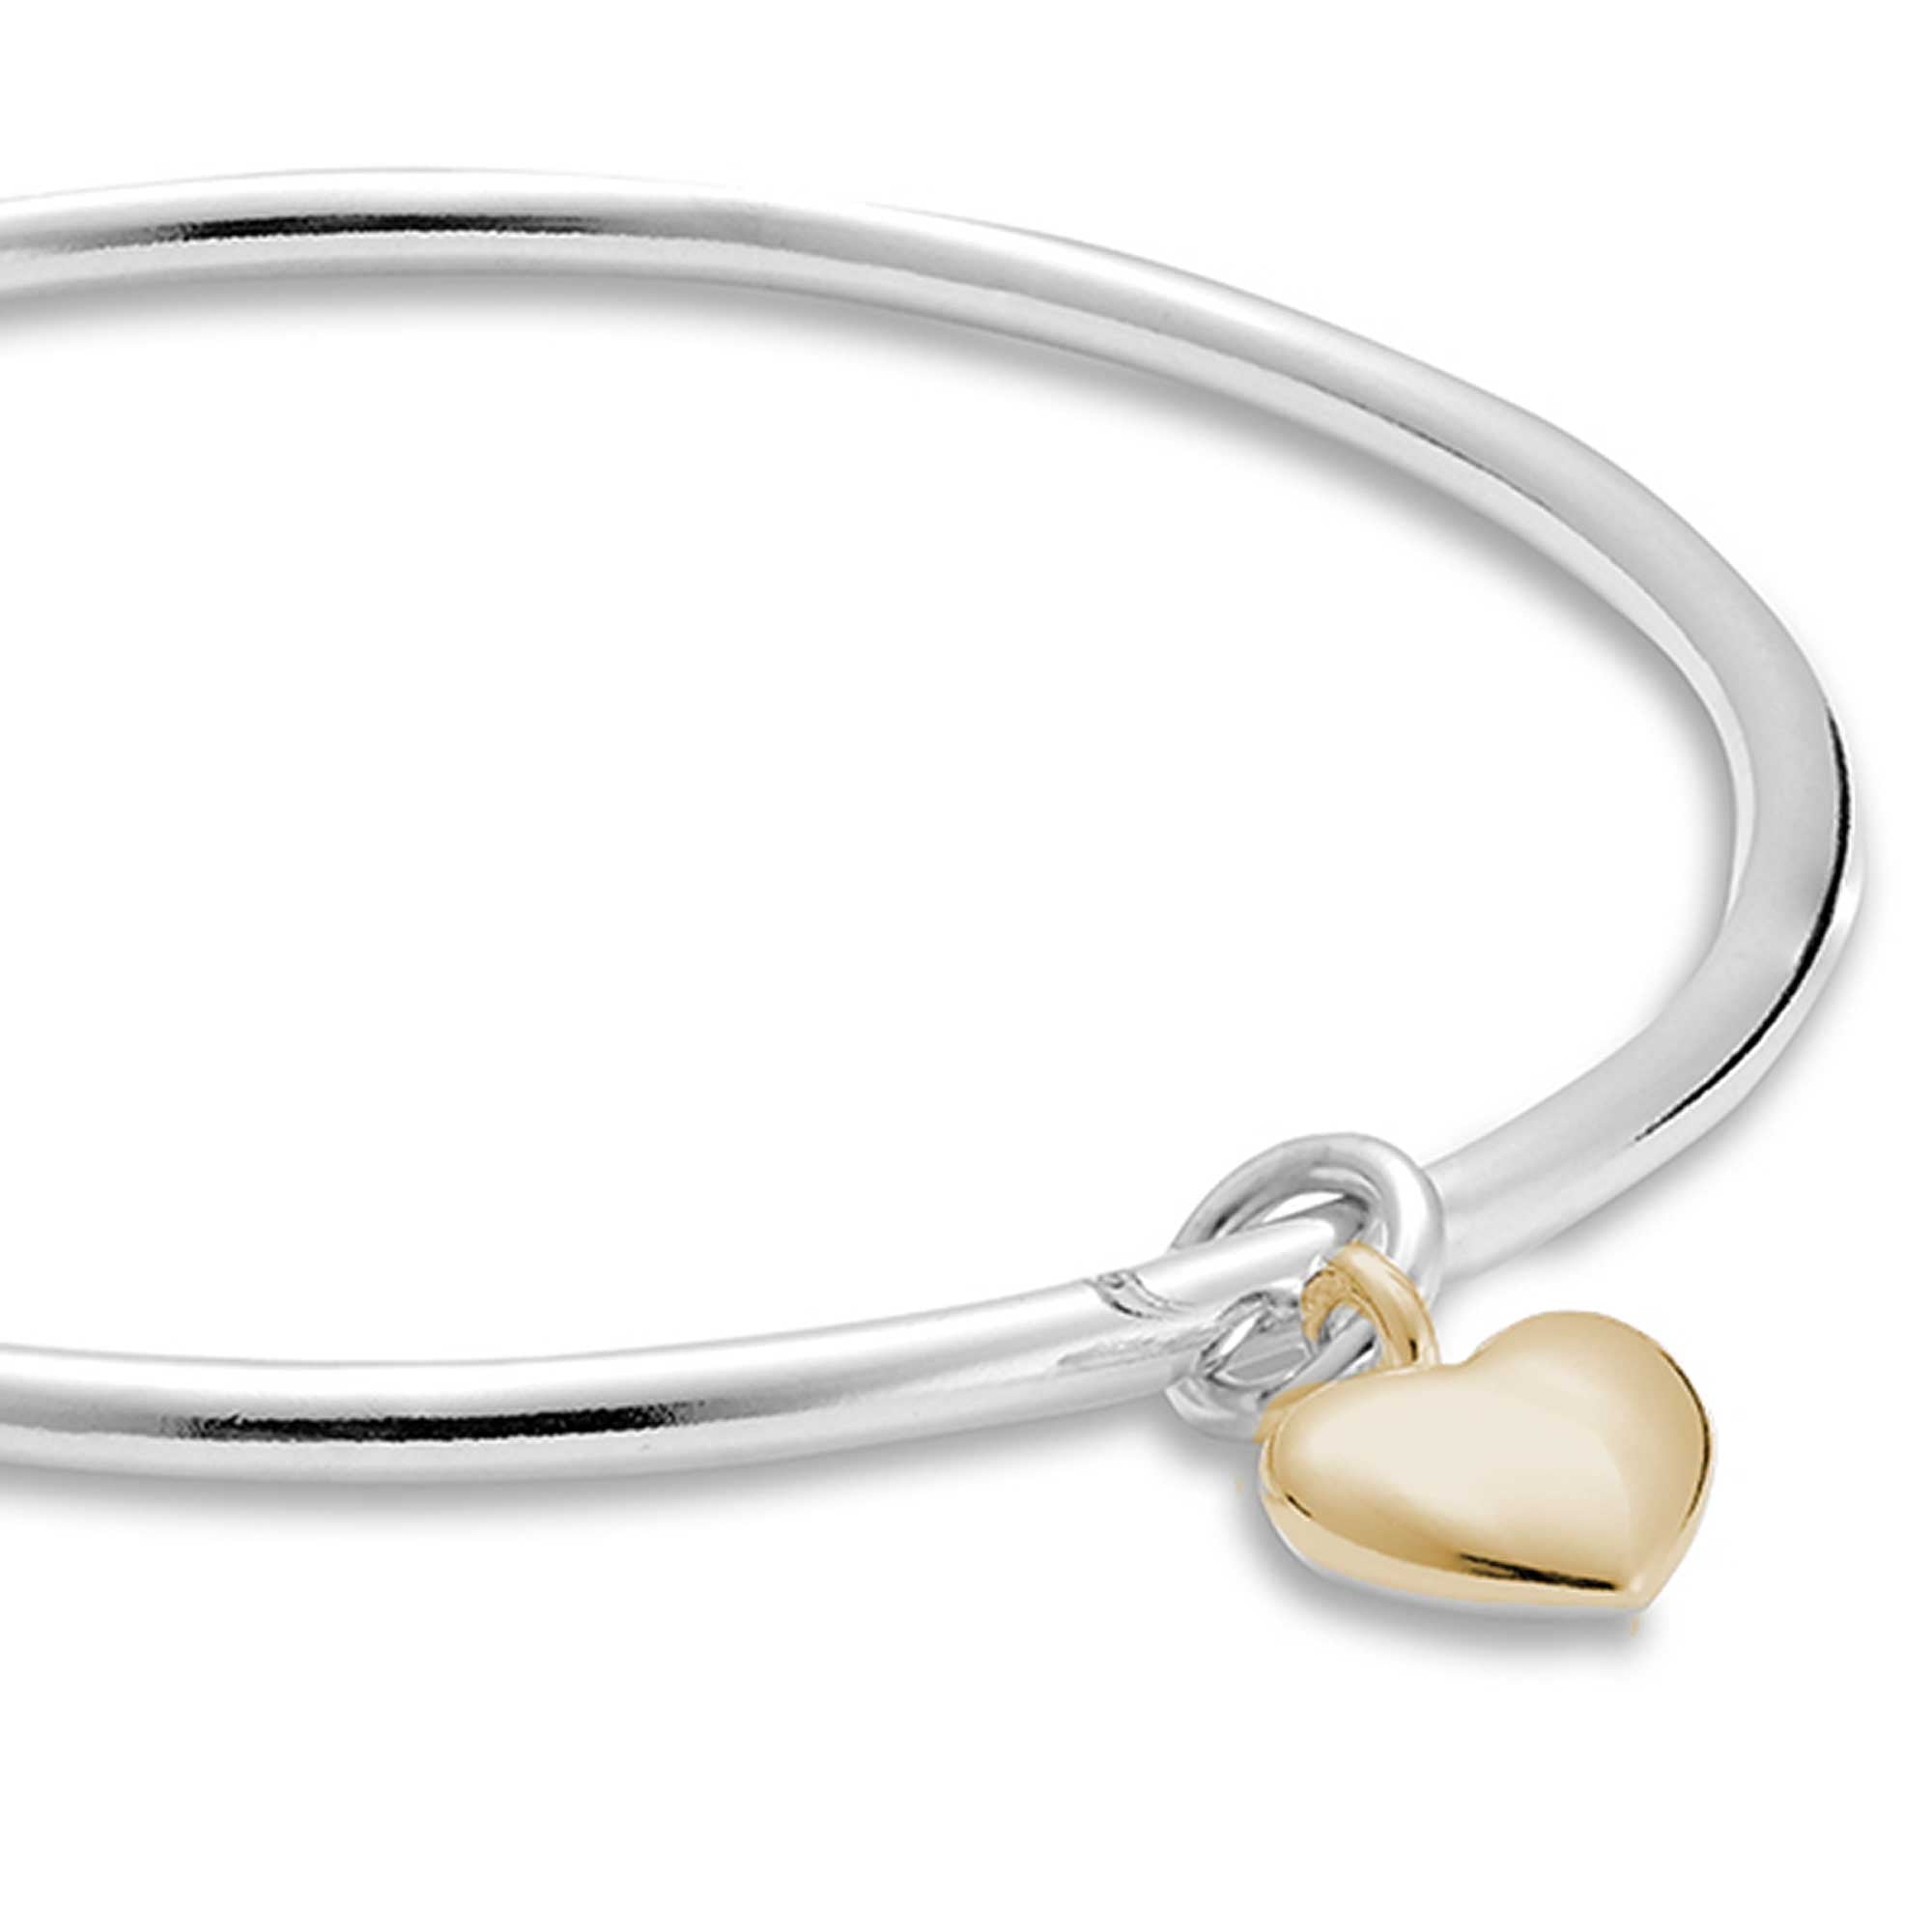 silver and solid 9ct gold heart charm bracelet bangle bracelet for women designer jewellery made in UK